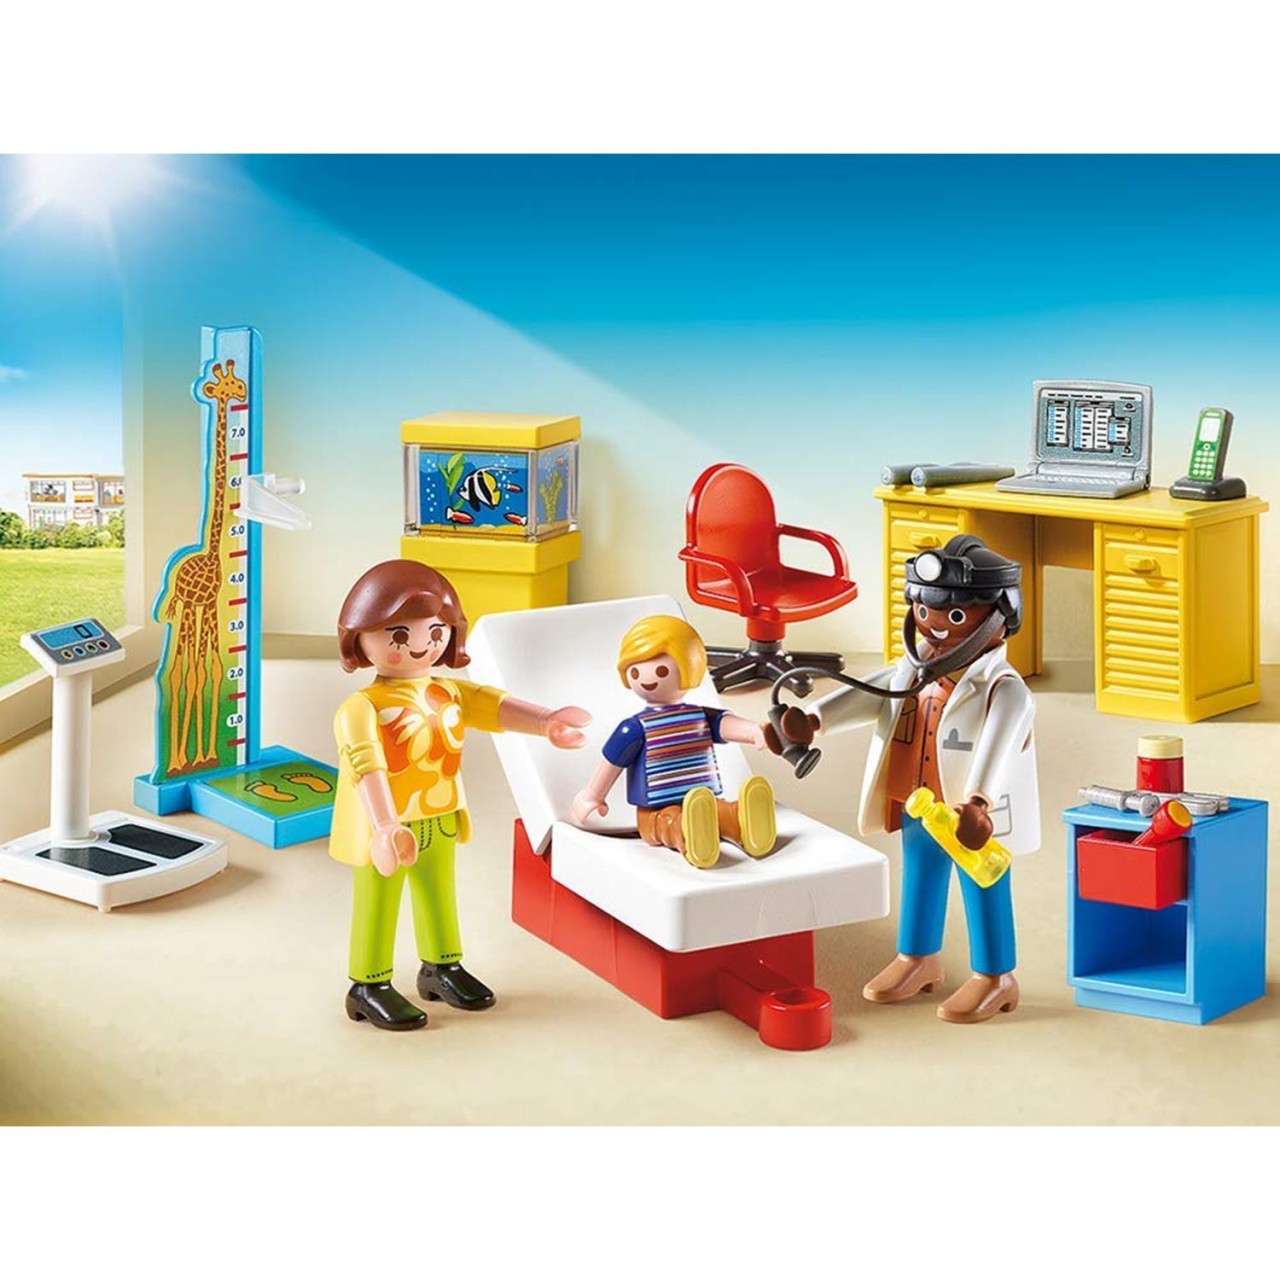 Playmobil 70034 StarterPack Beim Kinderarzt